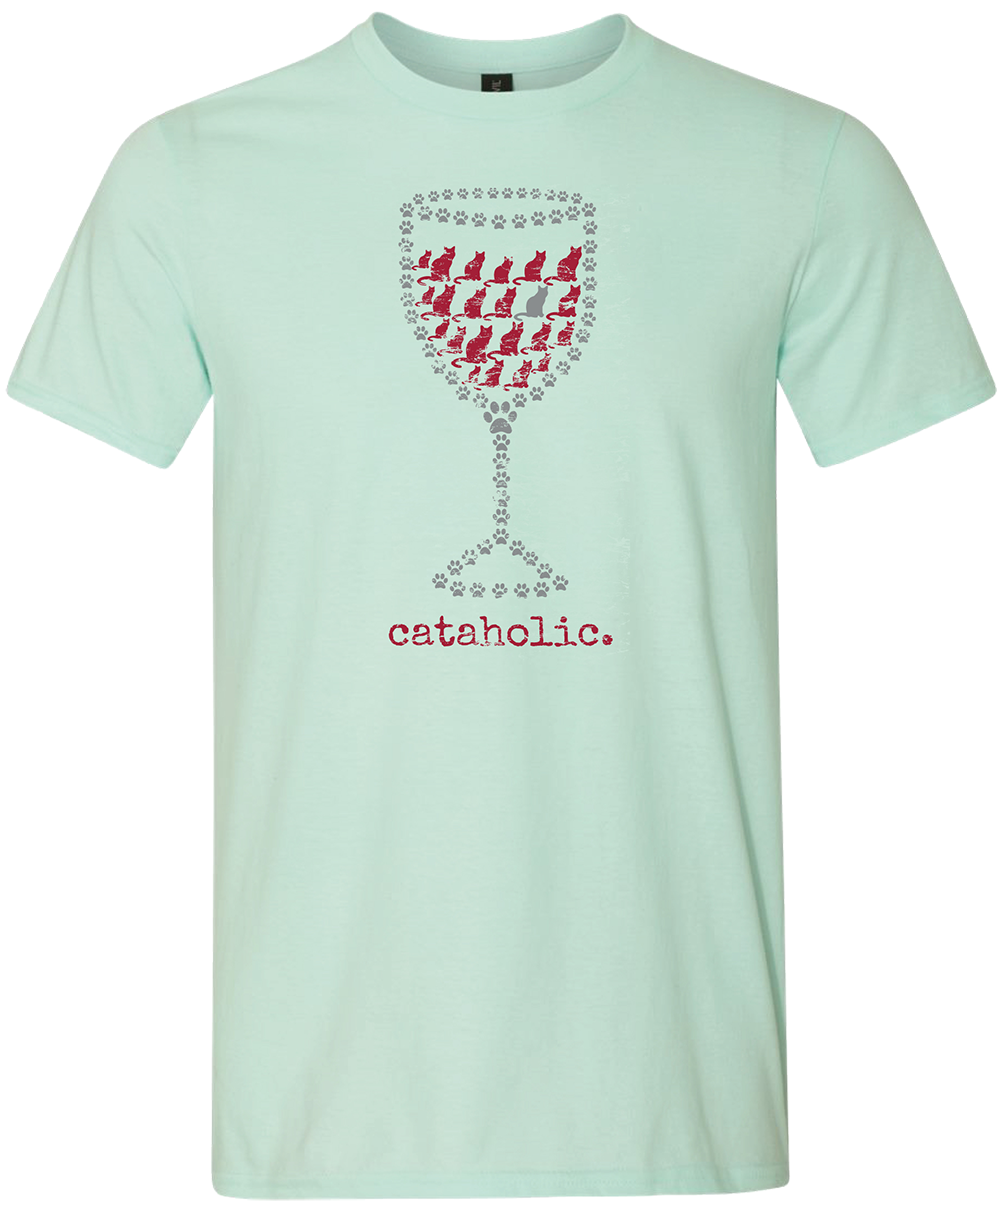 Cataholic- Short Sleeve T-Shirt